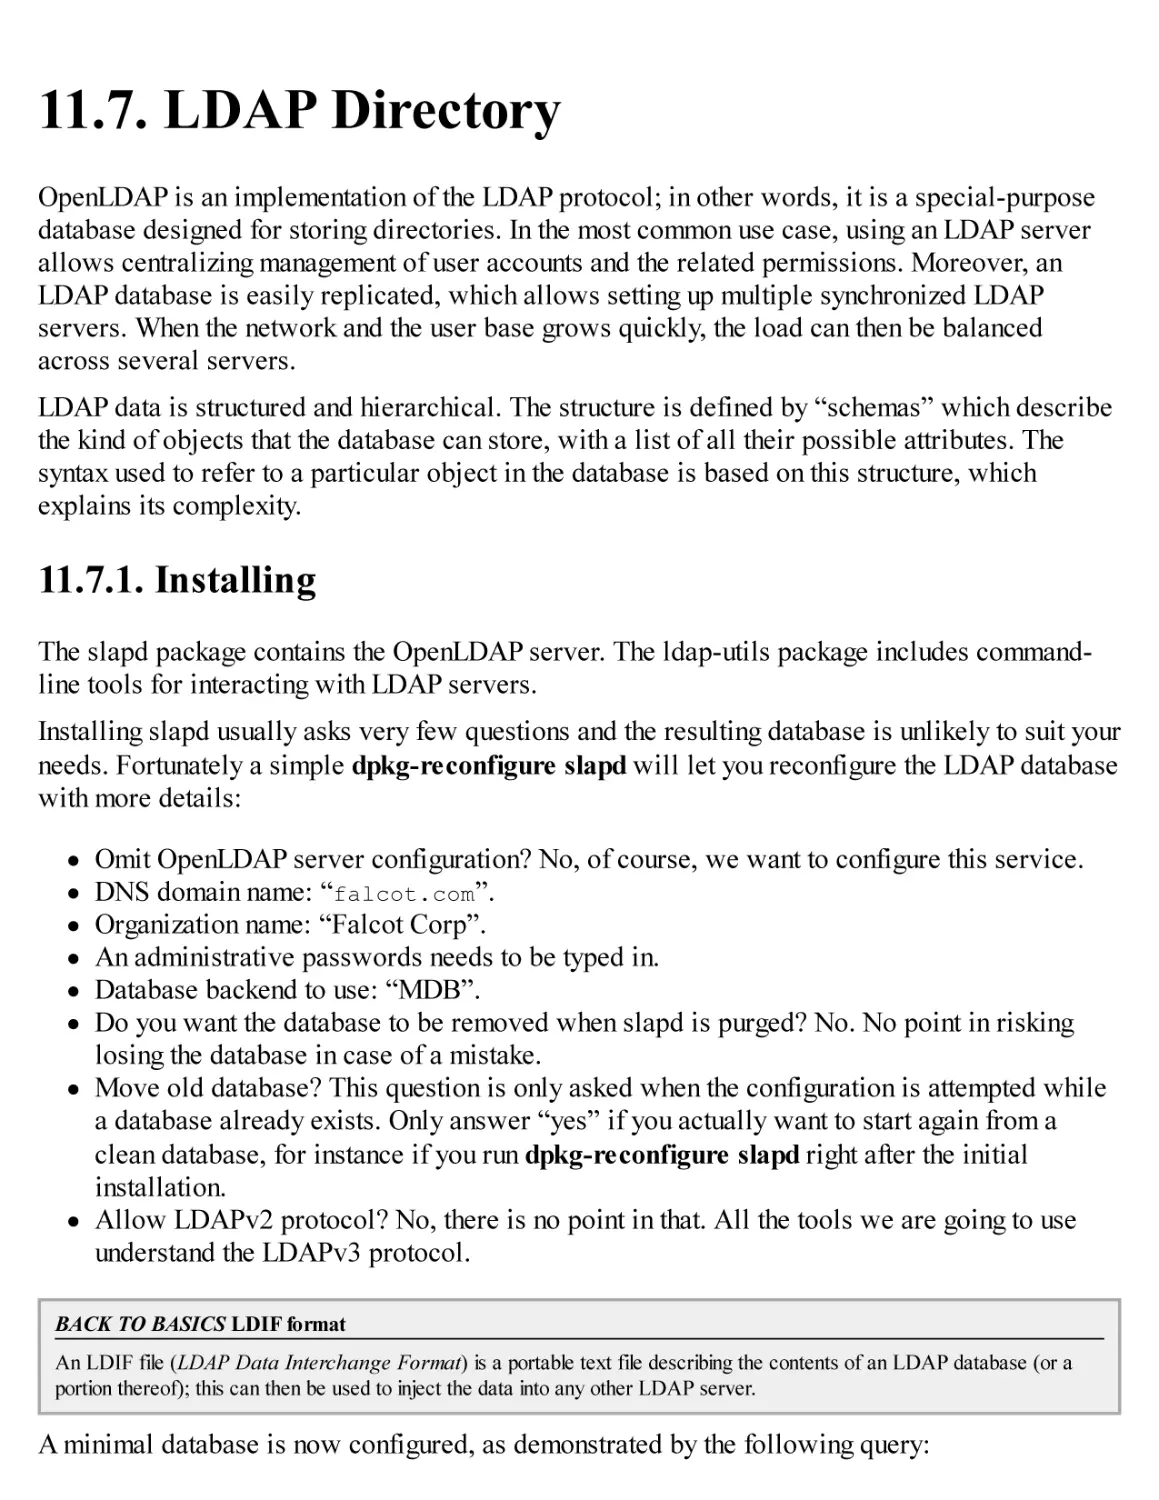 11.7. LDAP Directory
11.7.1. Installing